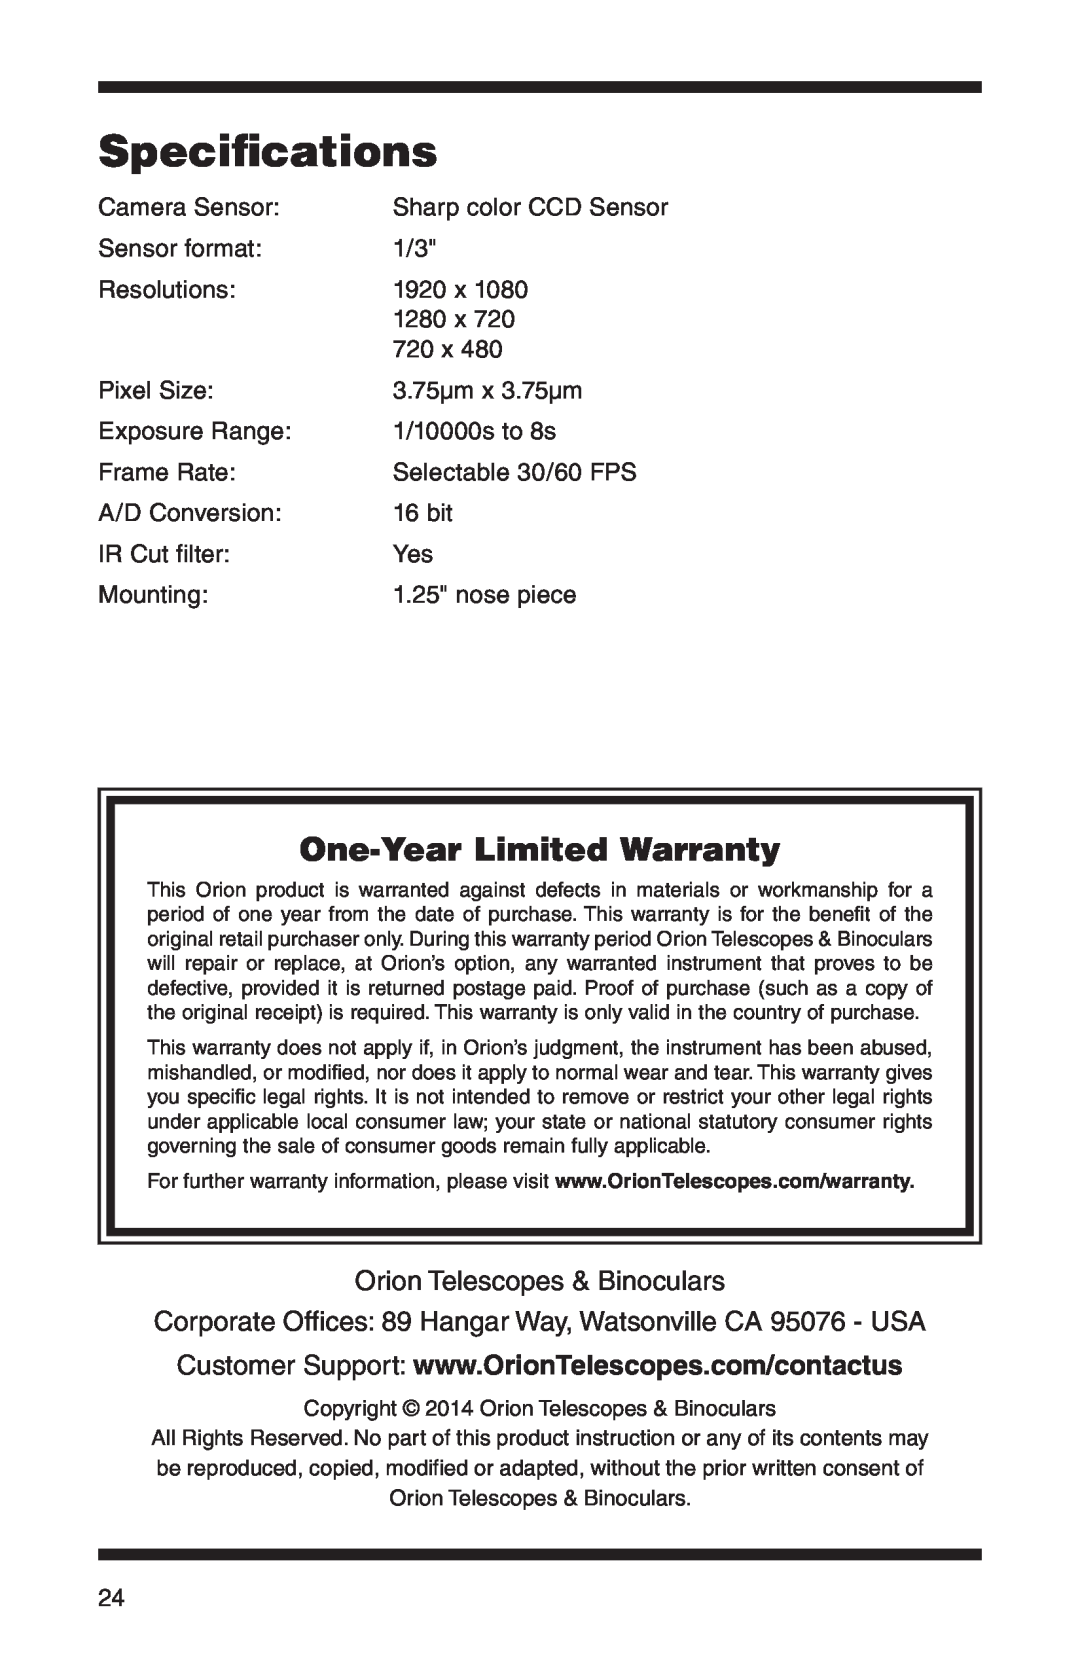 Orion 52099 Specifications, Orion Telescopes & Binoculars, Corporate Offices 89 Hangar Way, Watsonville CA 95076 - USA 